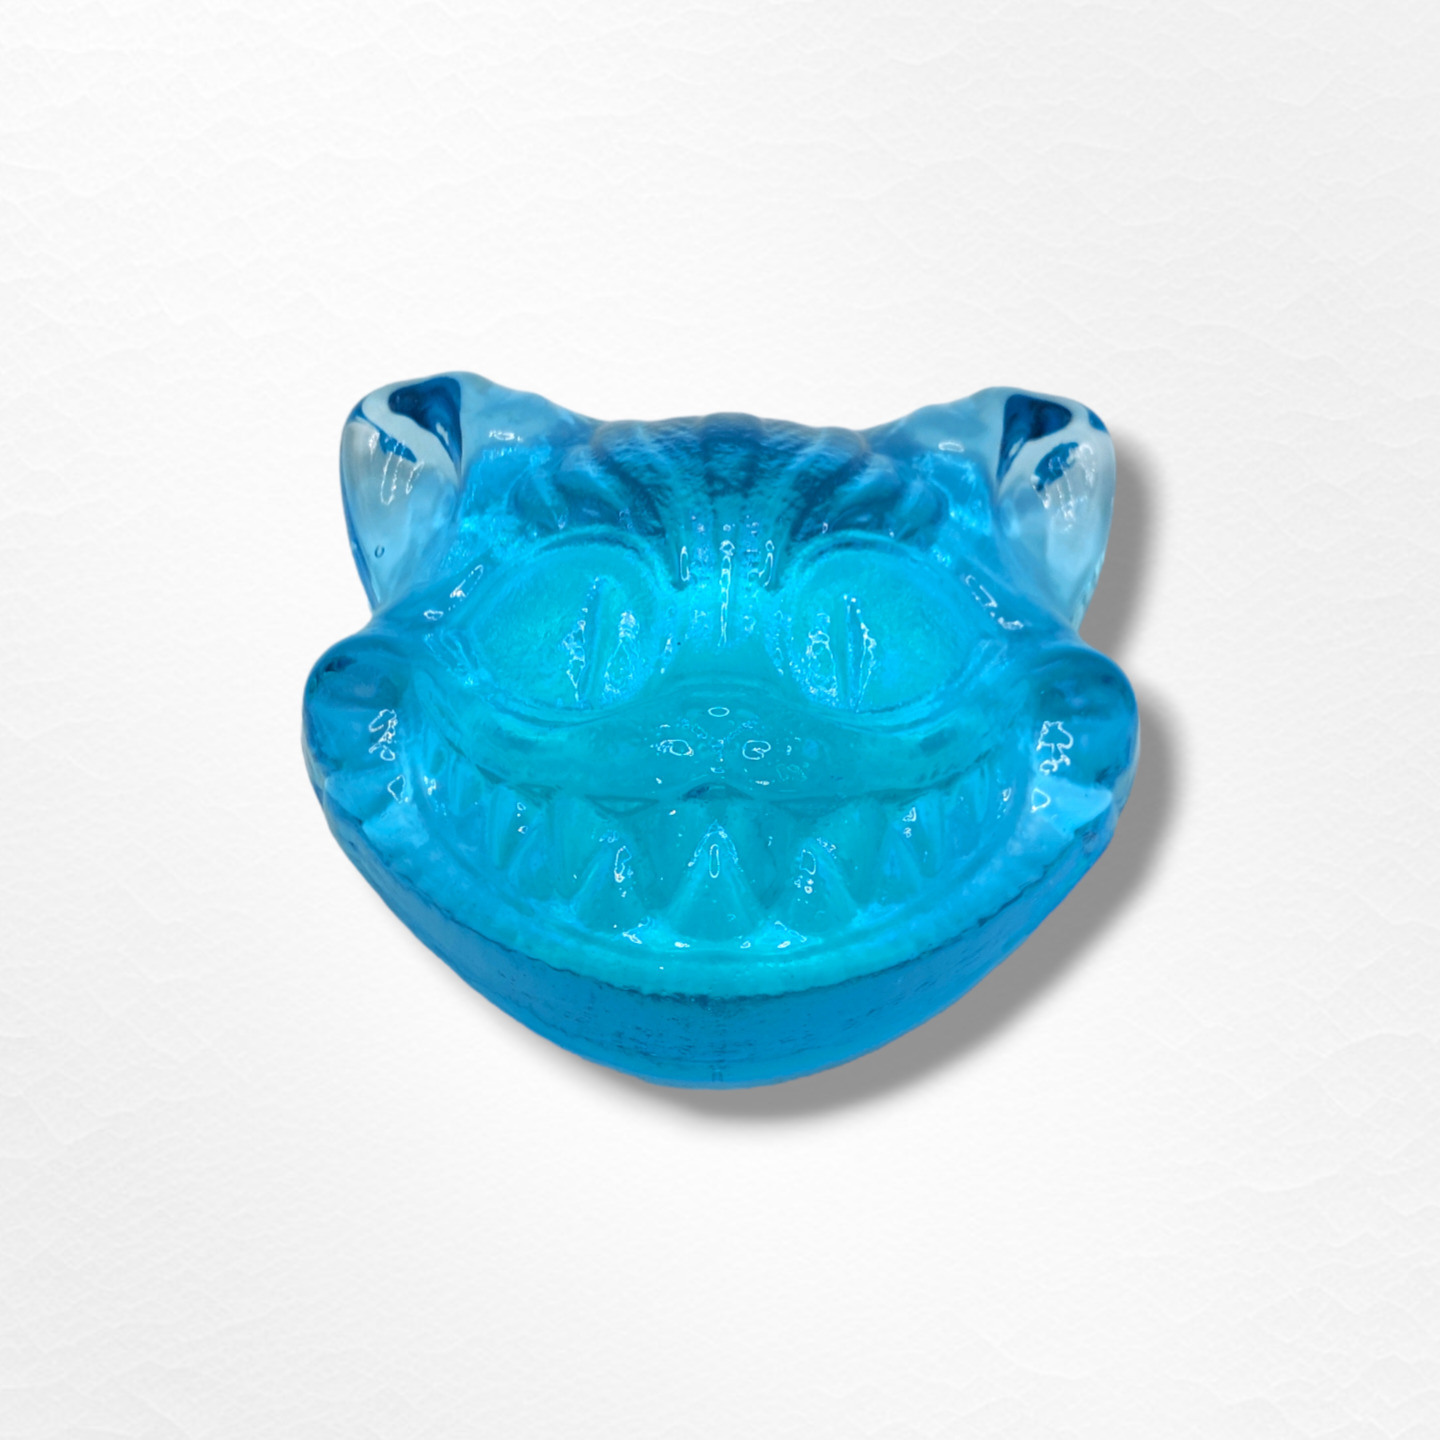 BLUE VASELINE STYLE URANIUM GLASS GLOW CHESHIRE CAT, Retro Home Decor Blacklight